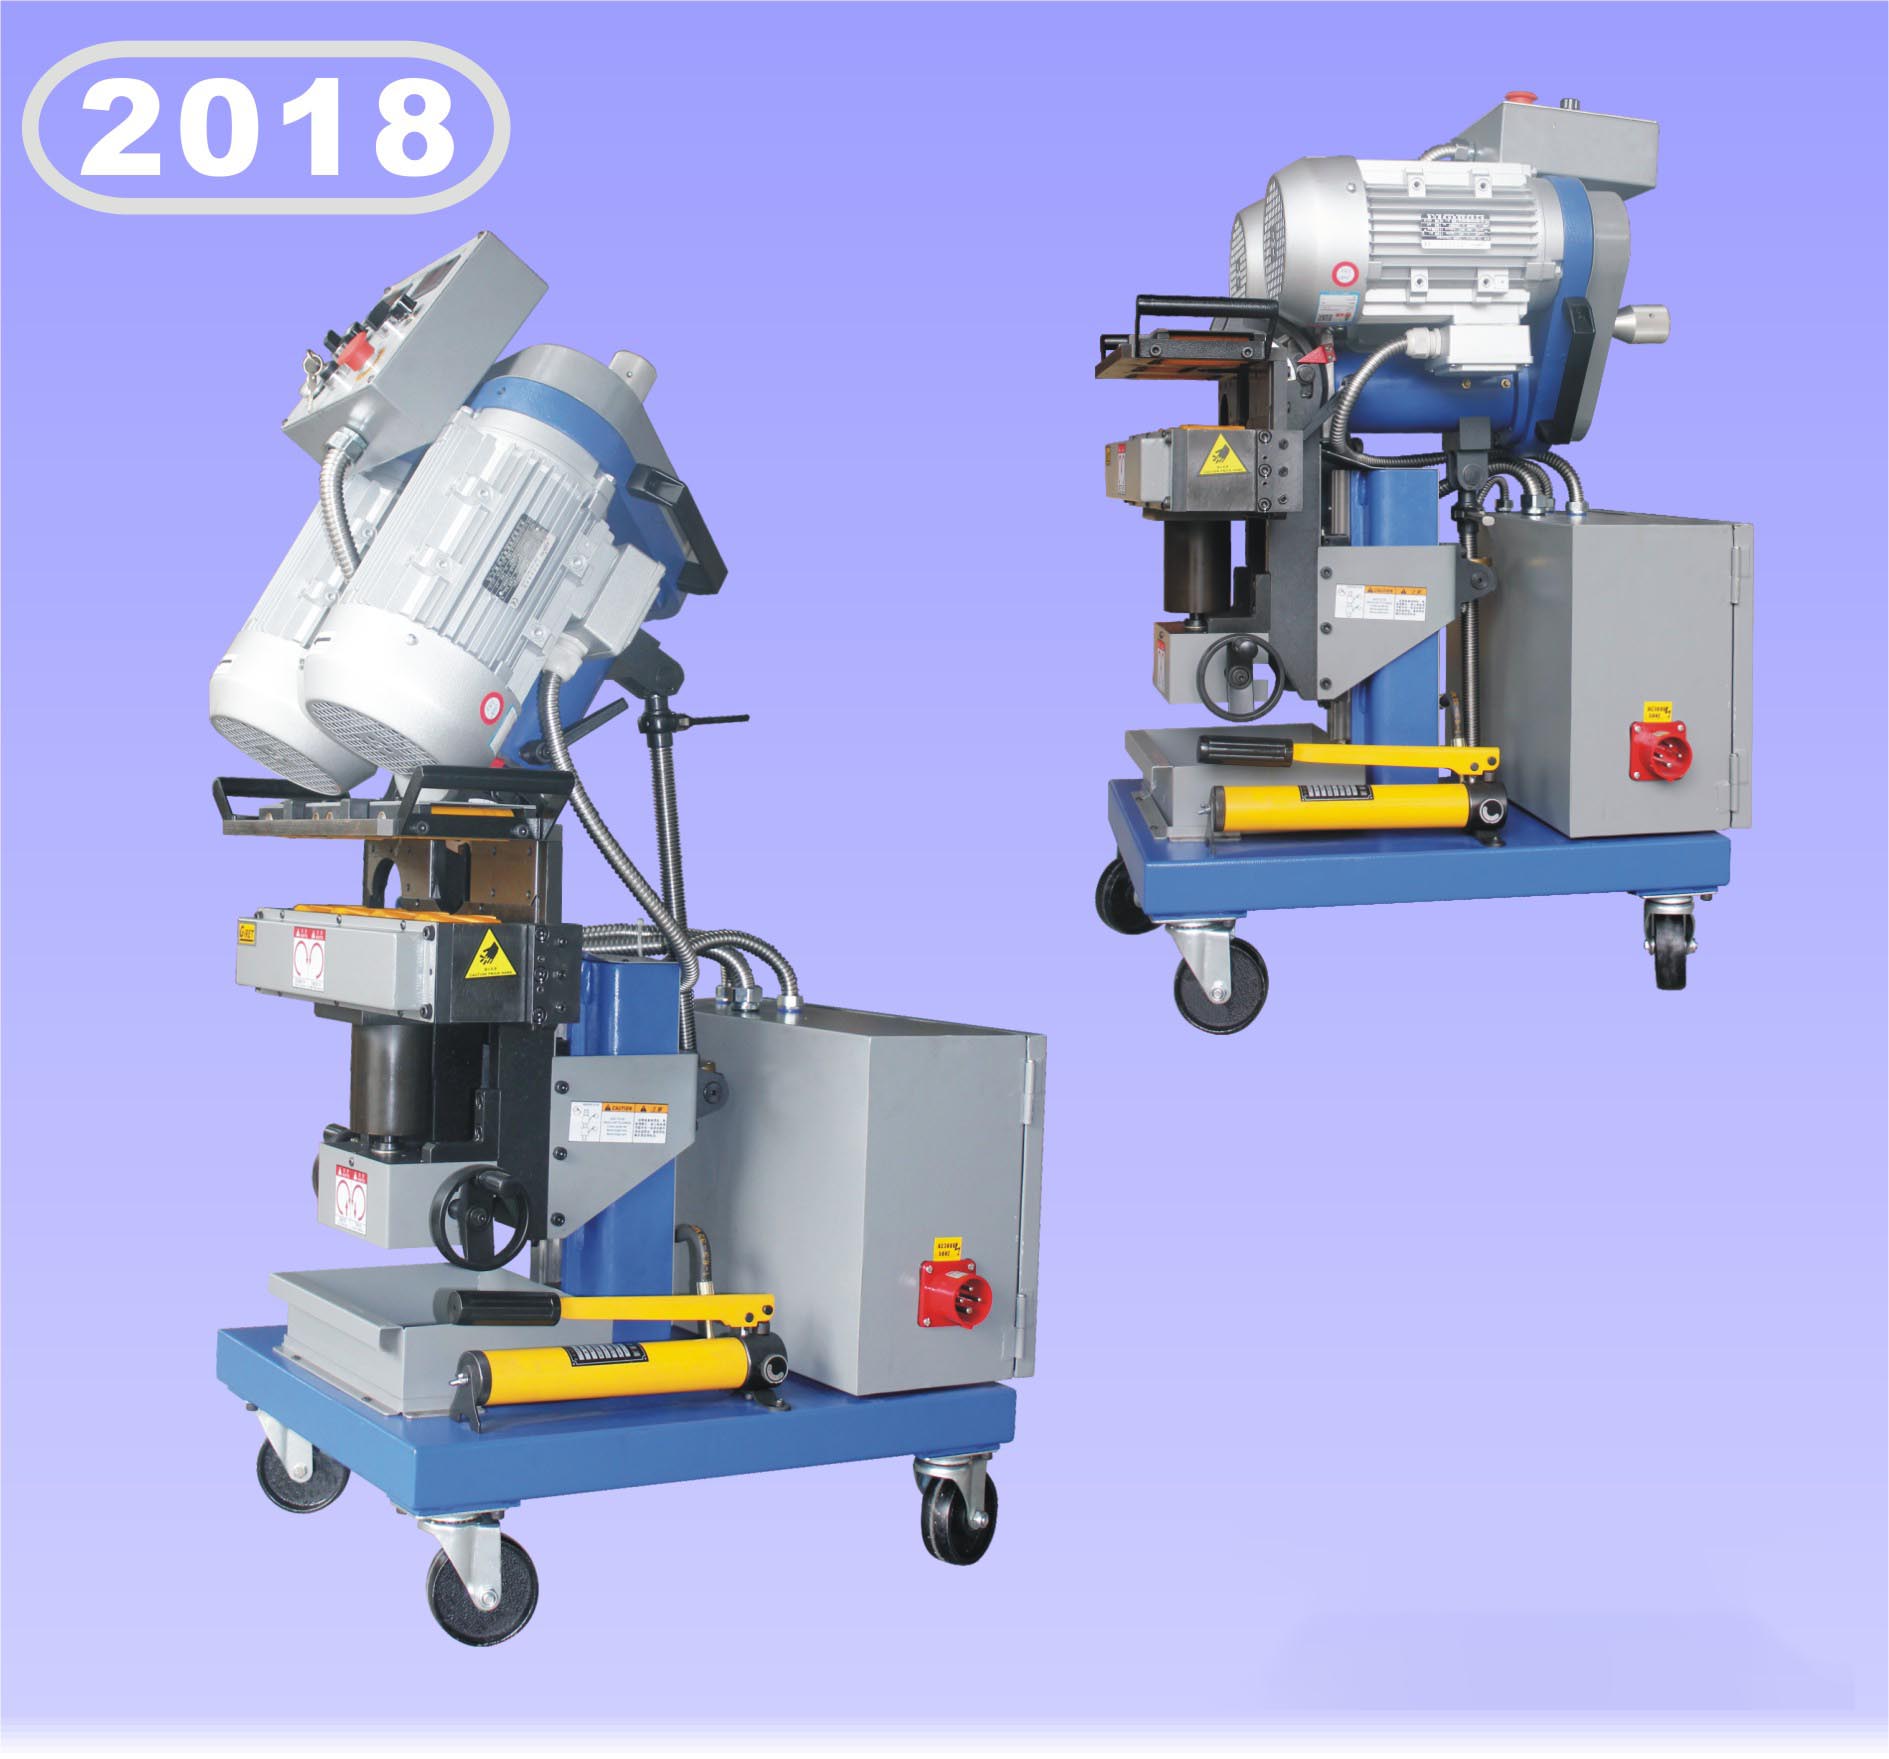 2018-GMMA-80A edge milling machine